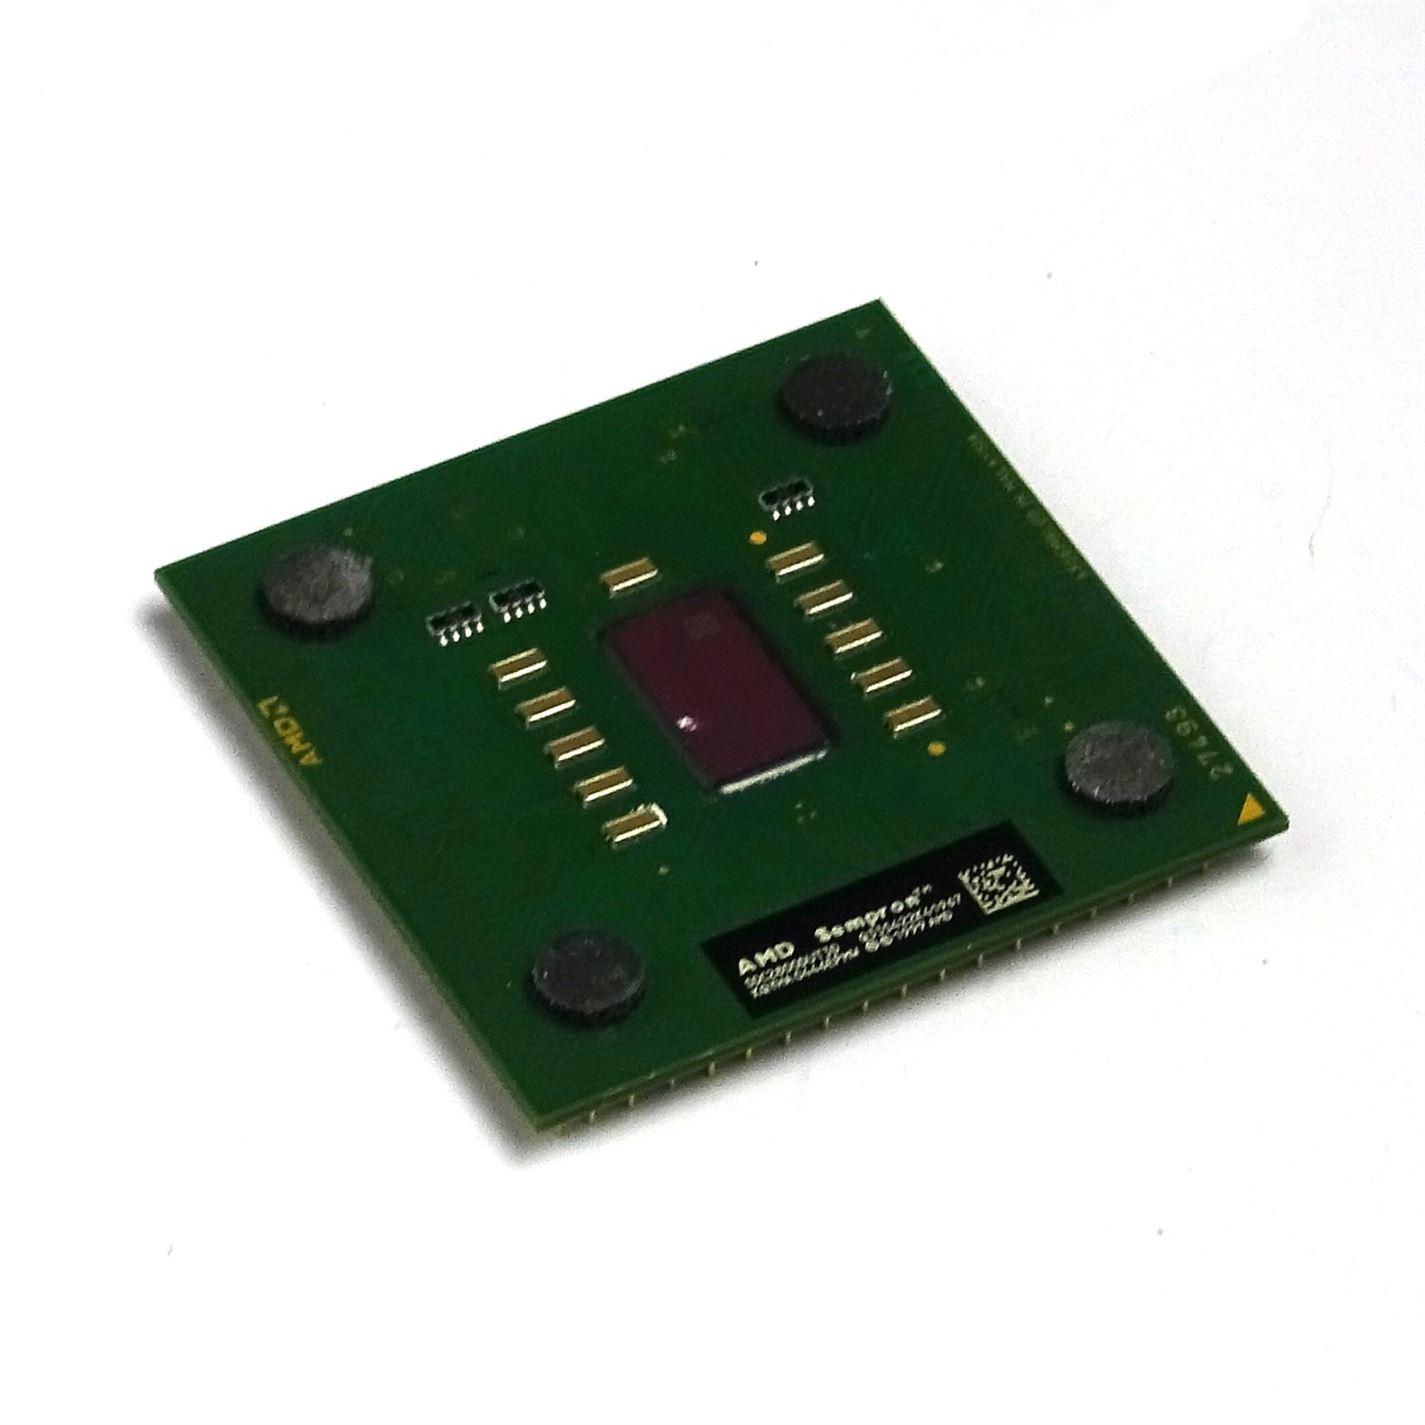 Pre-Owned AMD Sempron- 2800 Plus 2Ghz - SDC2800DUT3D - Q33S422K41967 - UK Seller 